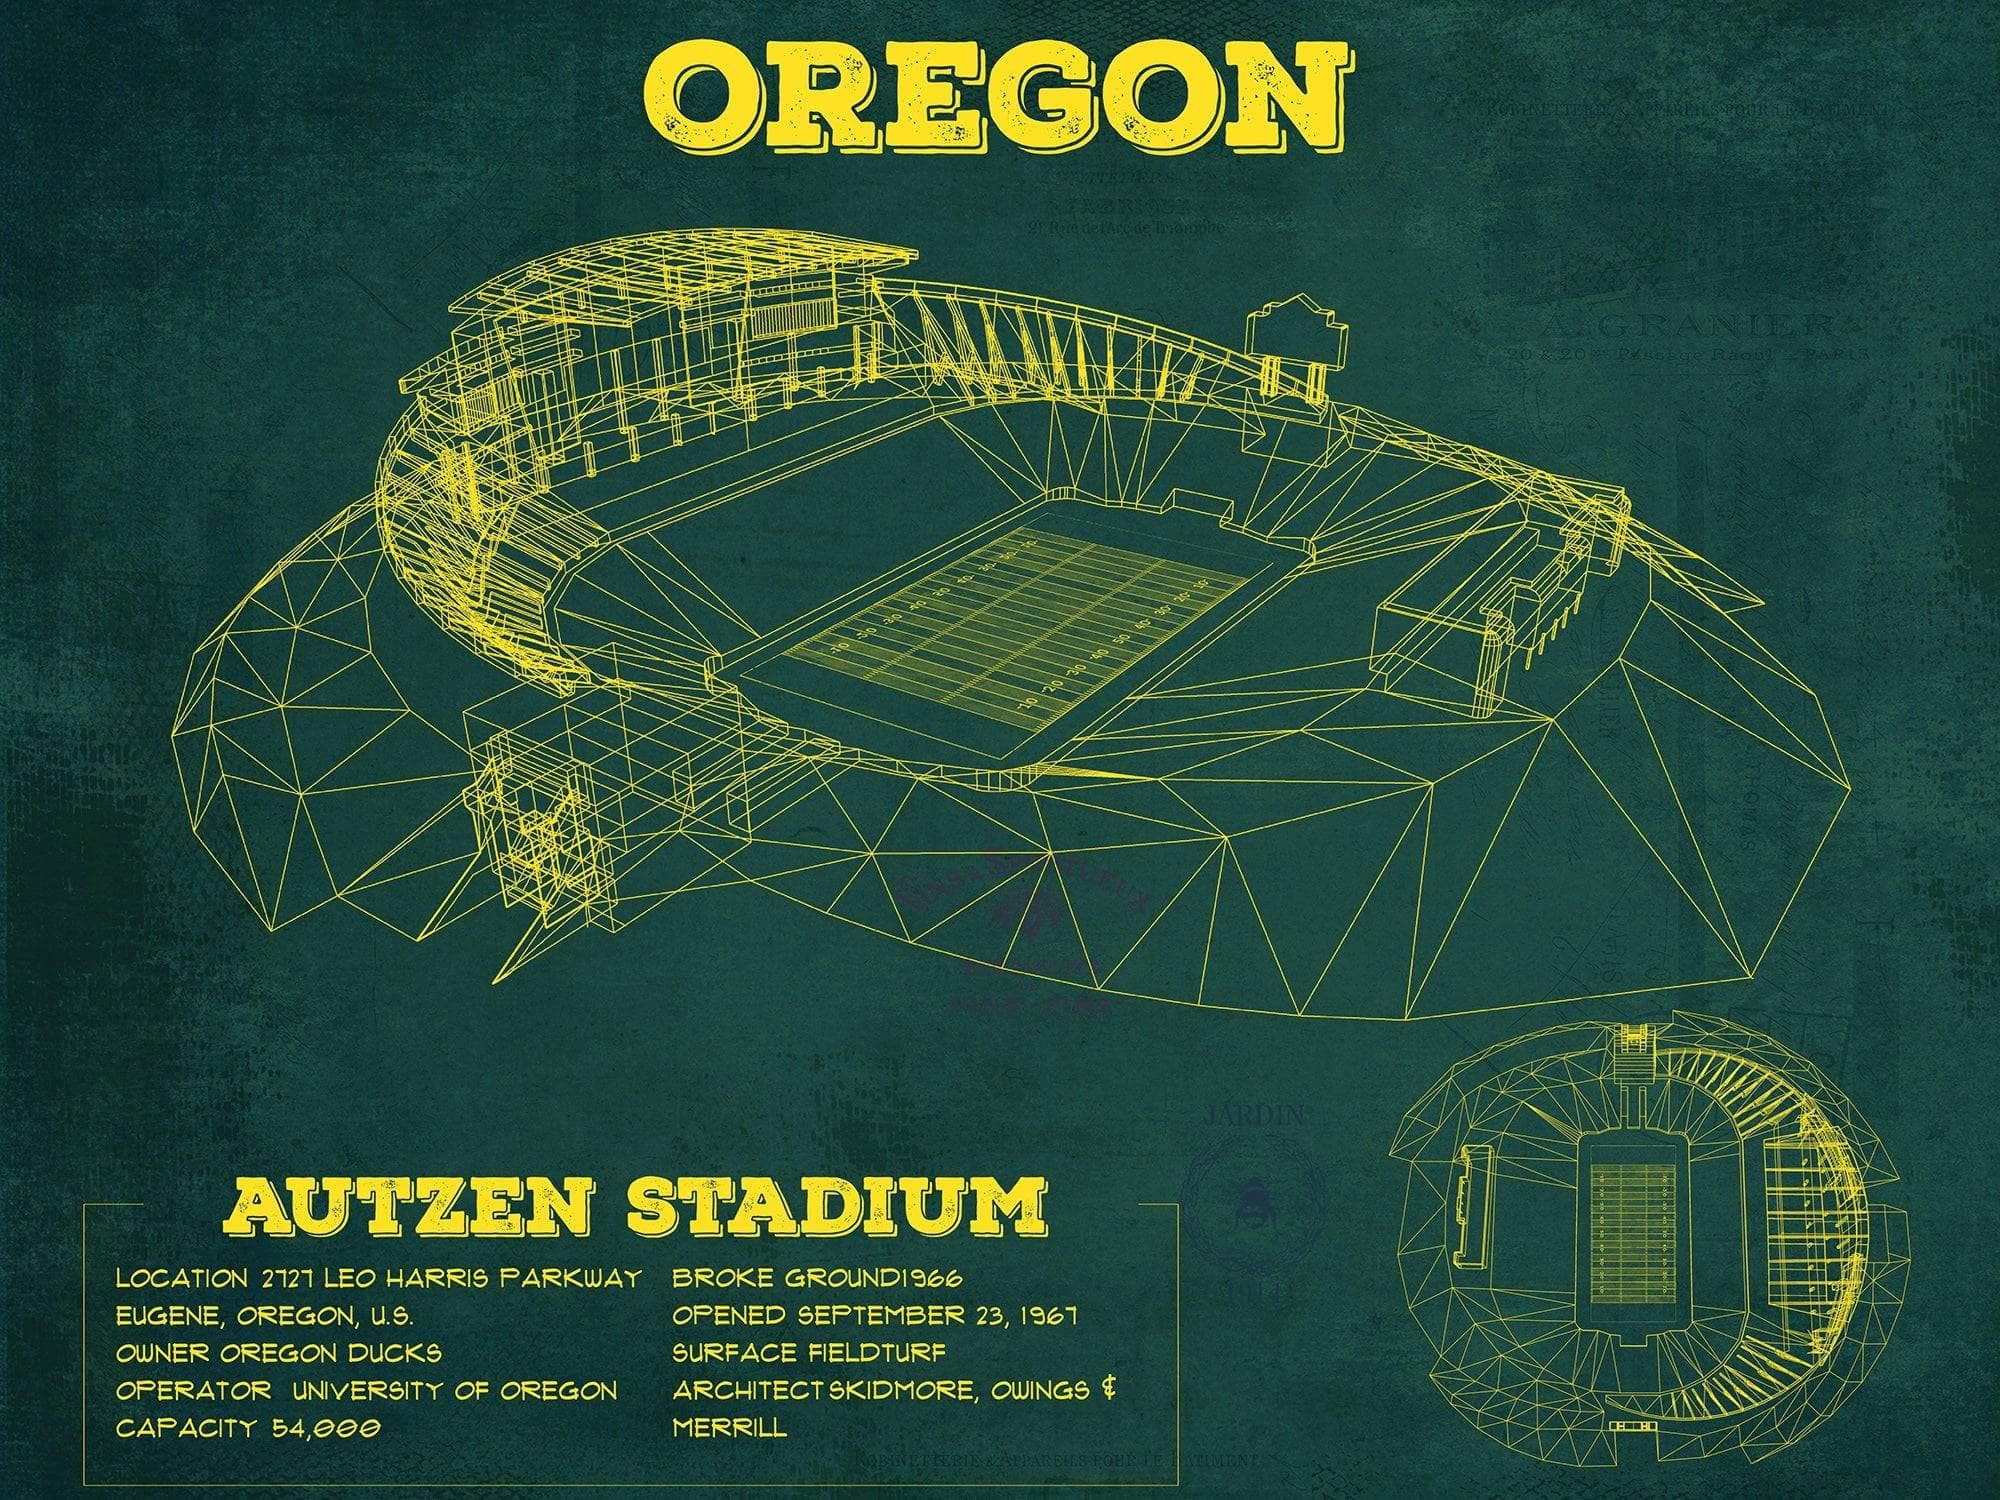 Cutler West College Football Collection 14" x 11" / Unframed Vintage Autzen Stadium Blueprint - Oregon Ducks Football Print 750807391-14"-x-11"69899